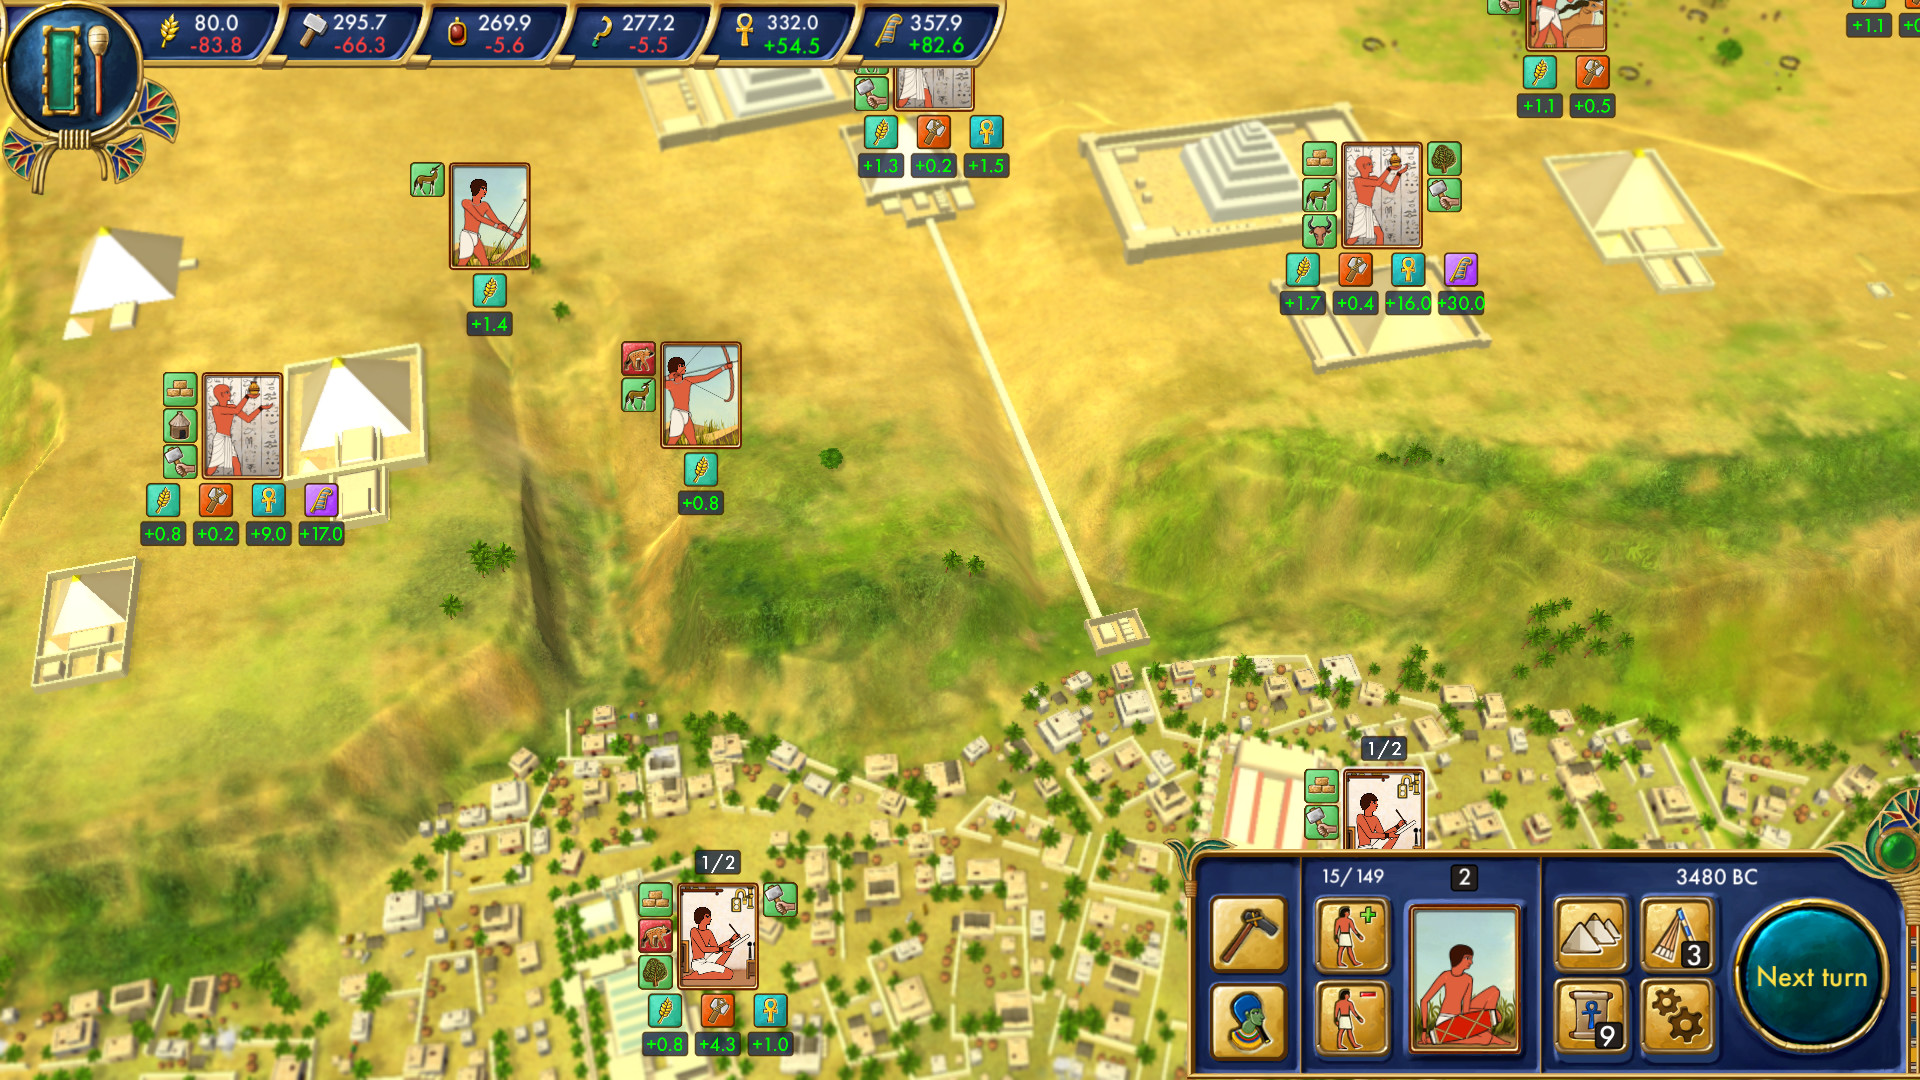 Egypt: Old Kingdom Demo Featured Screenshot #1